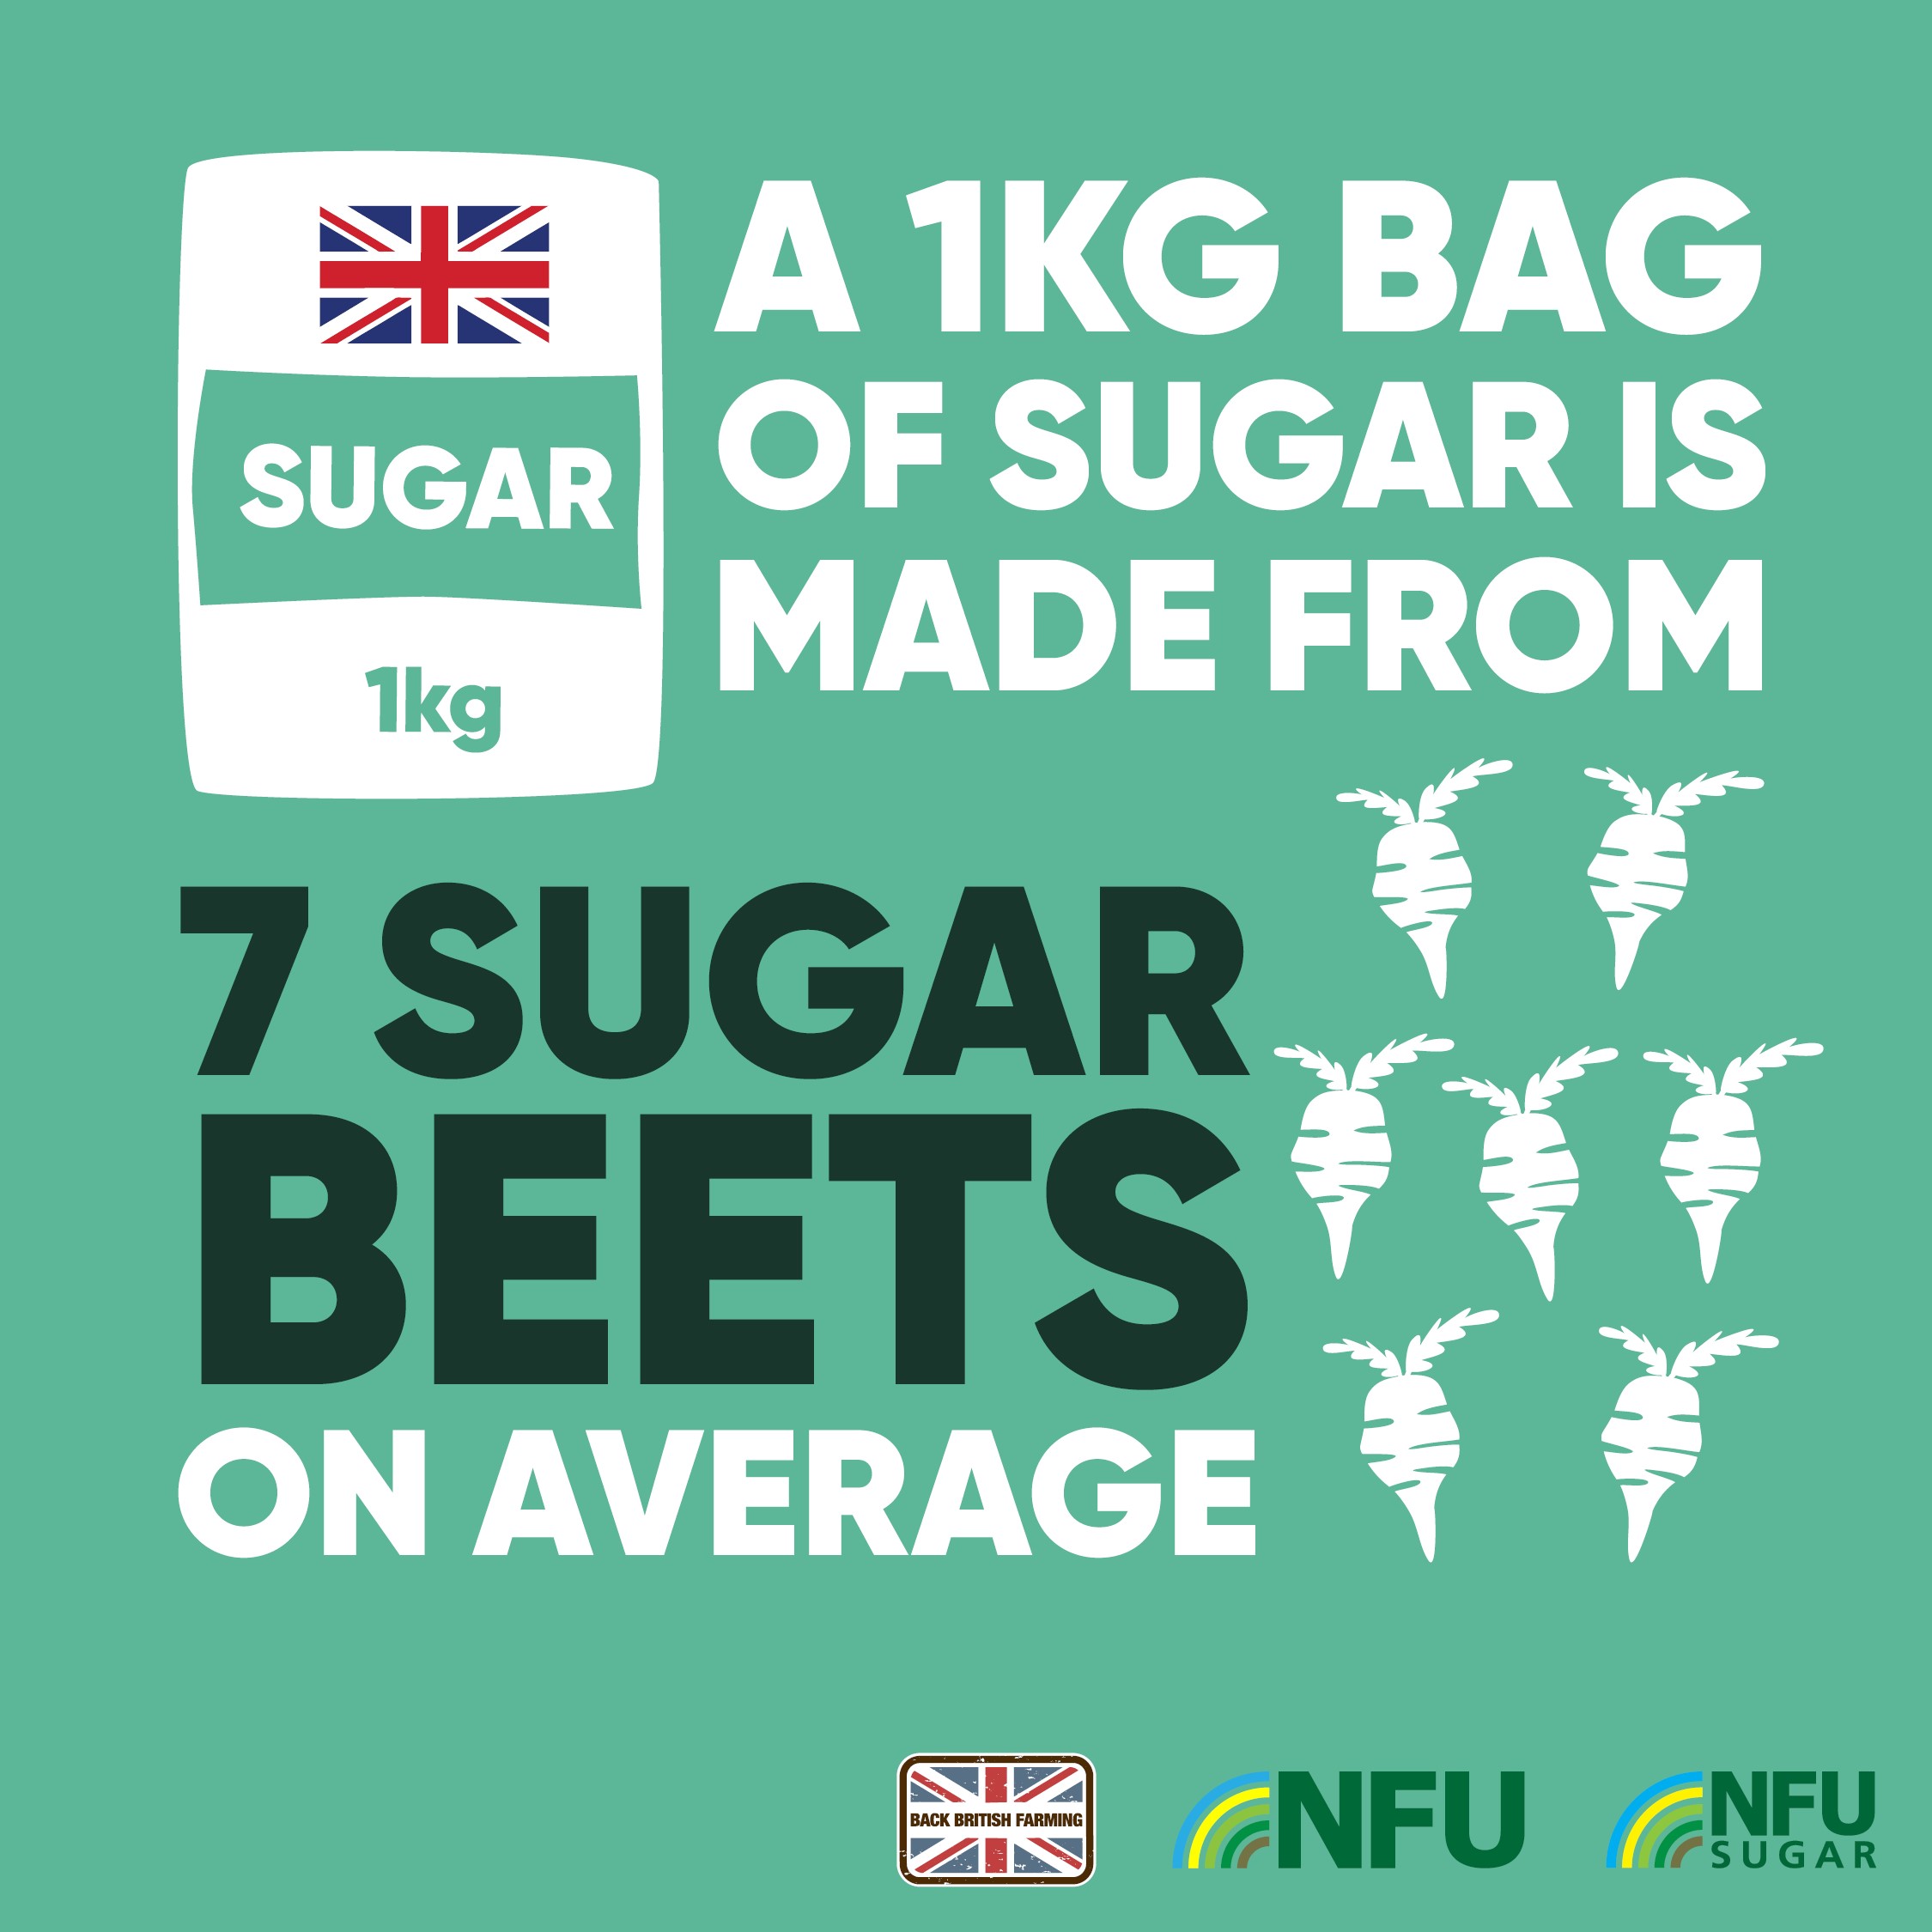  NFU Sugar infographic instagram 7 beets